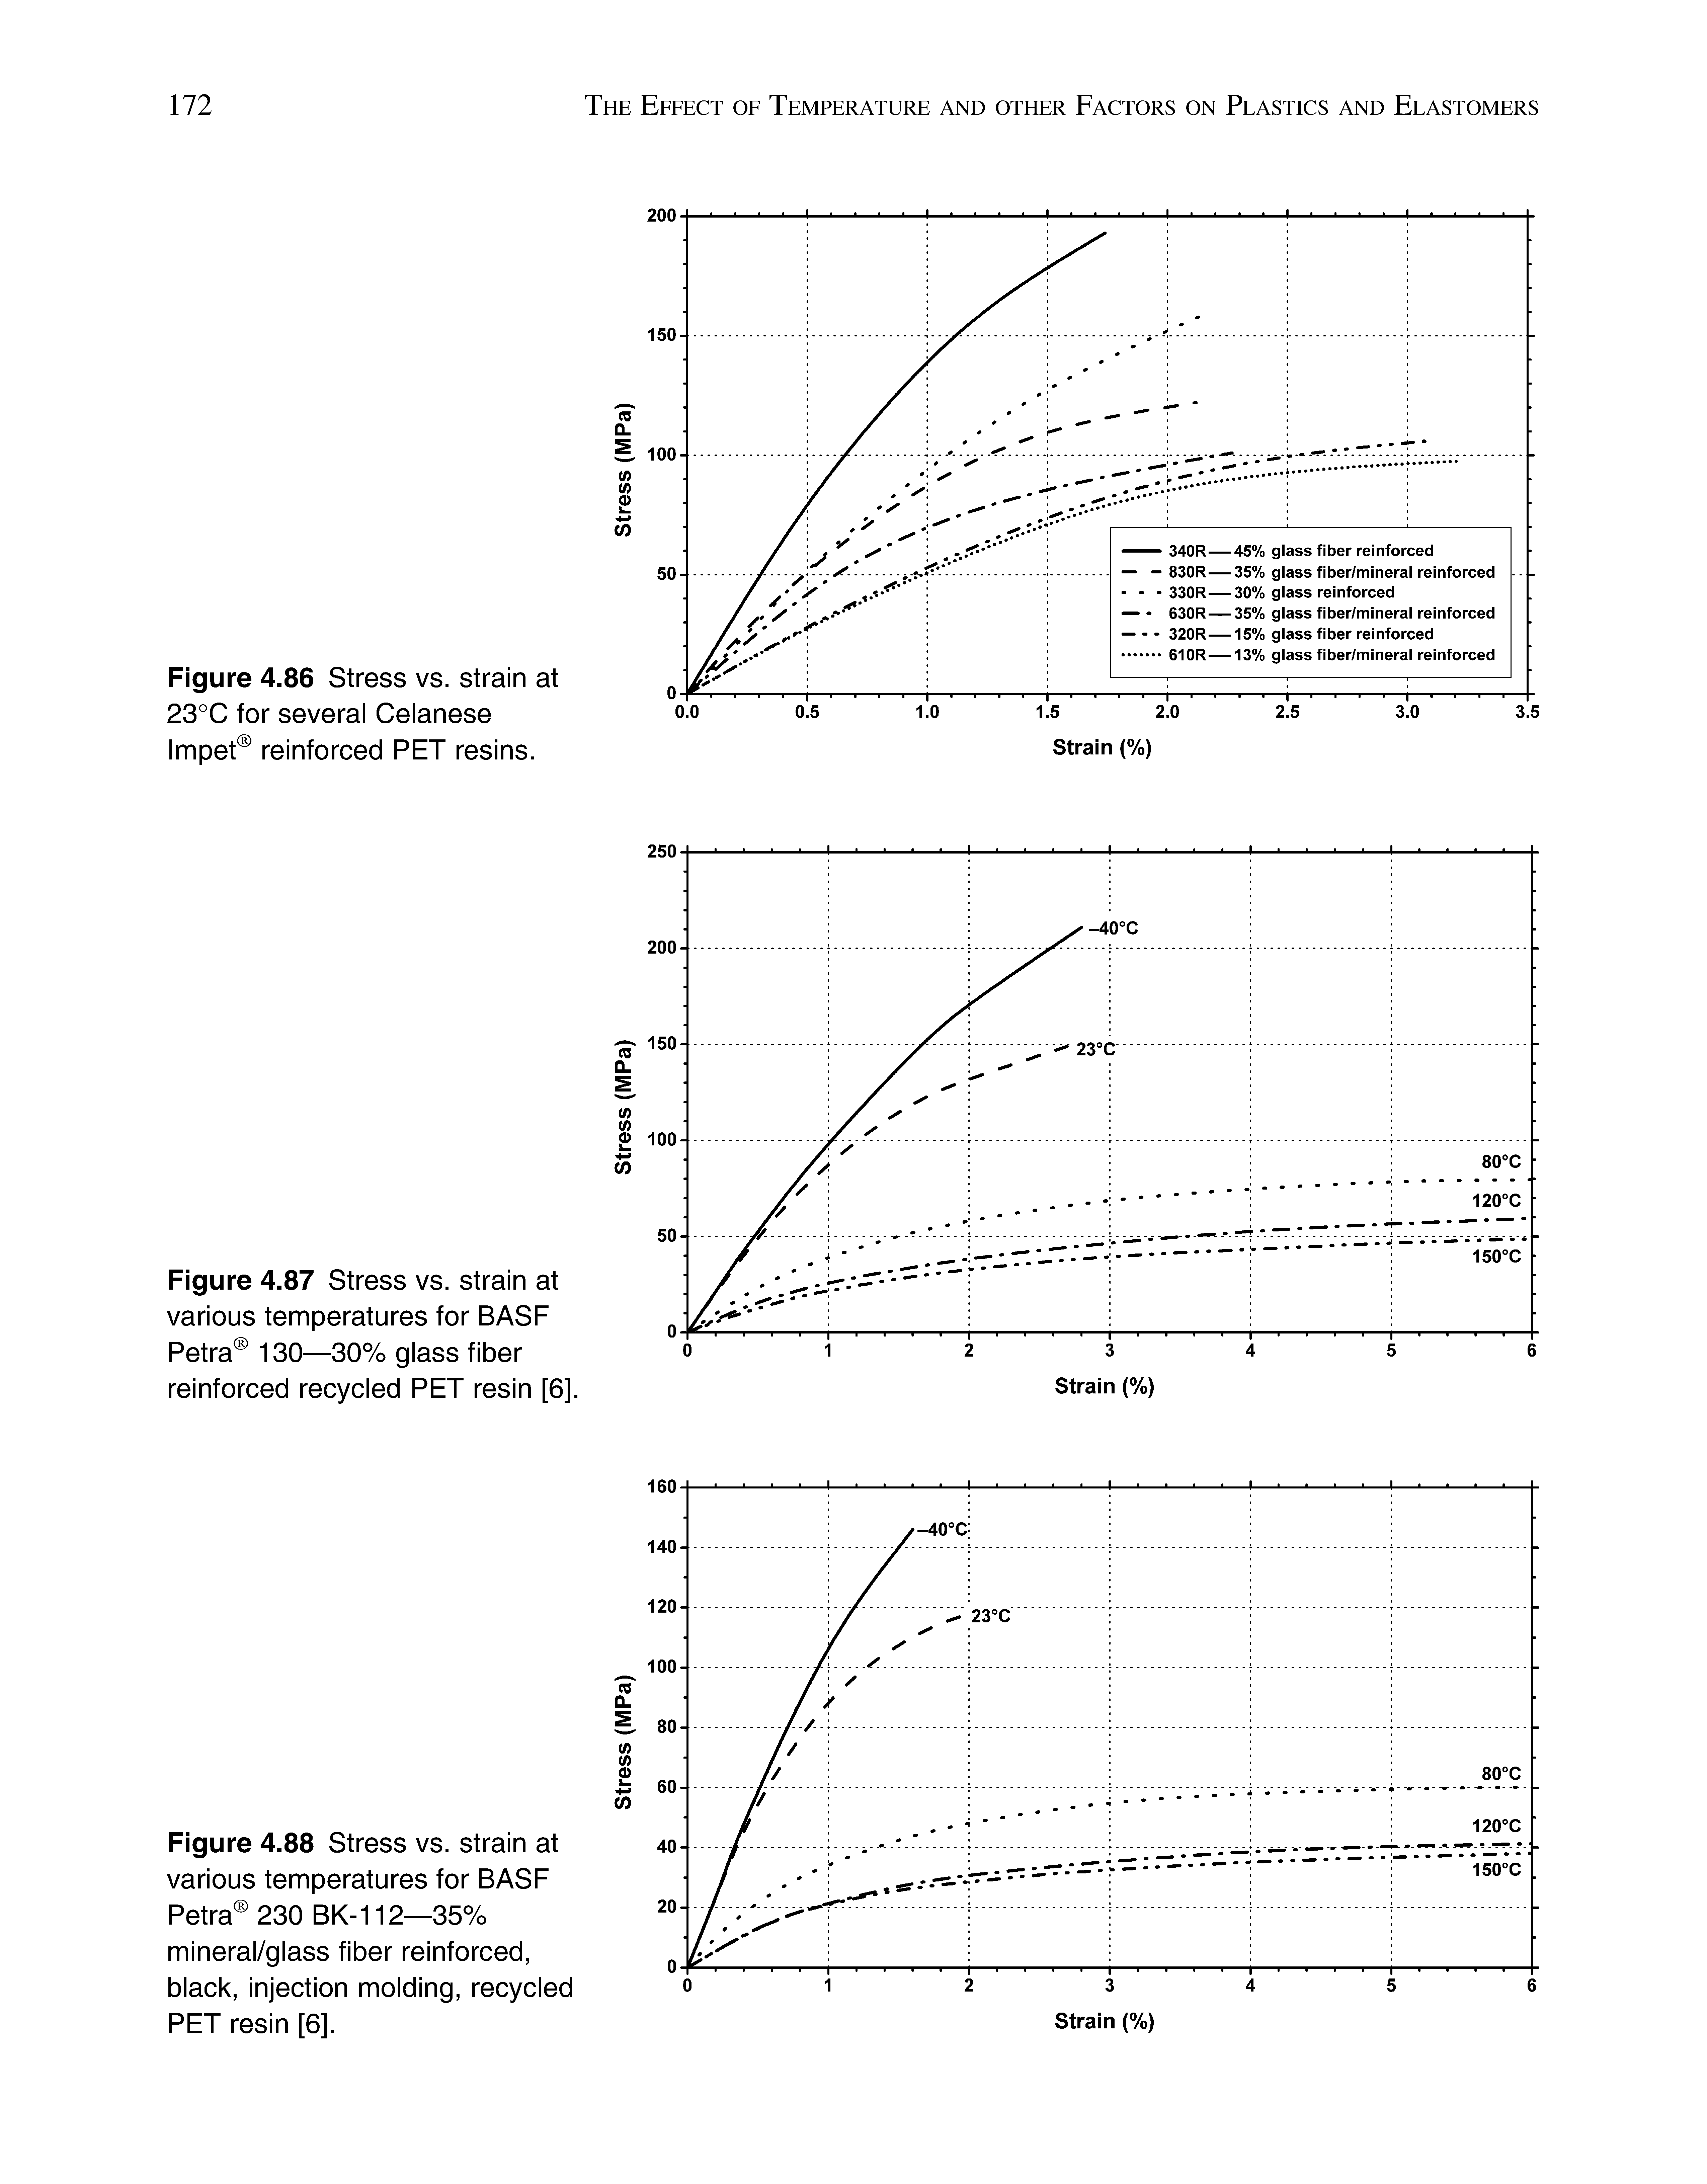 Figure 4.86 Stress vs. strain at 23°C for several Celanese Impet reinforced PET resins.